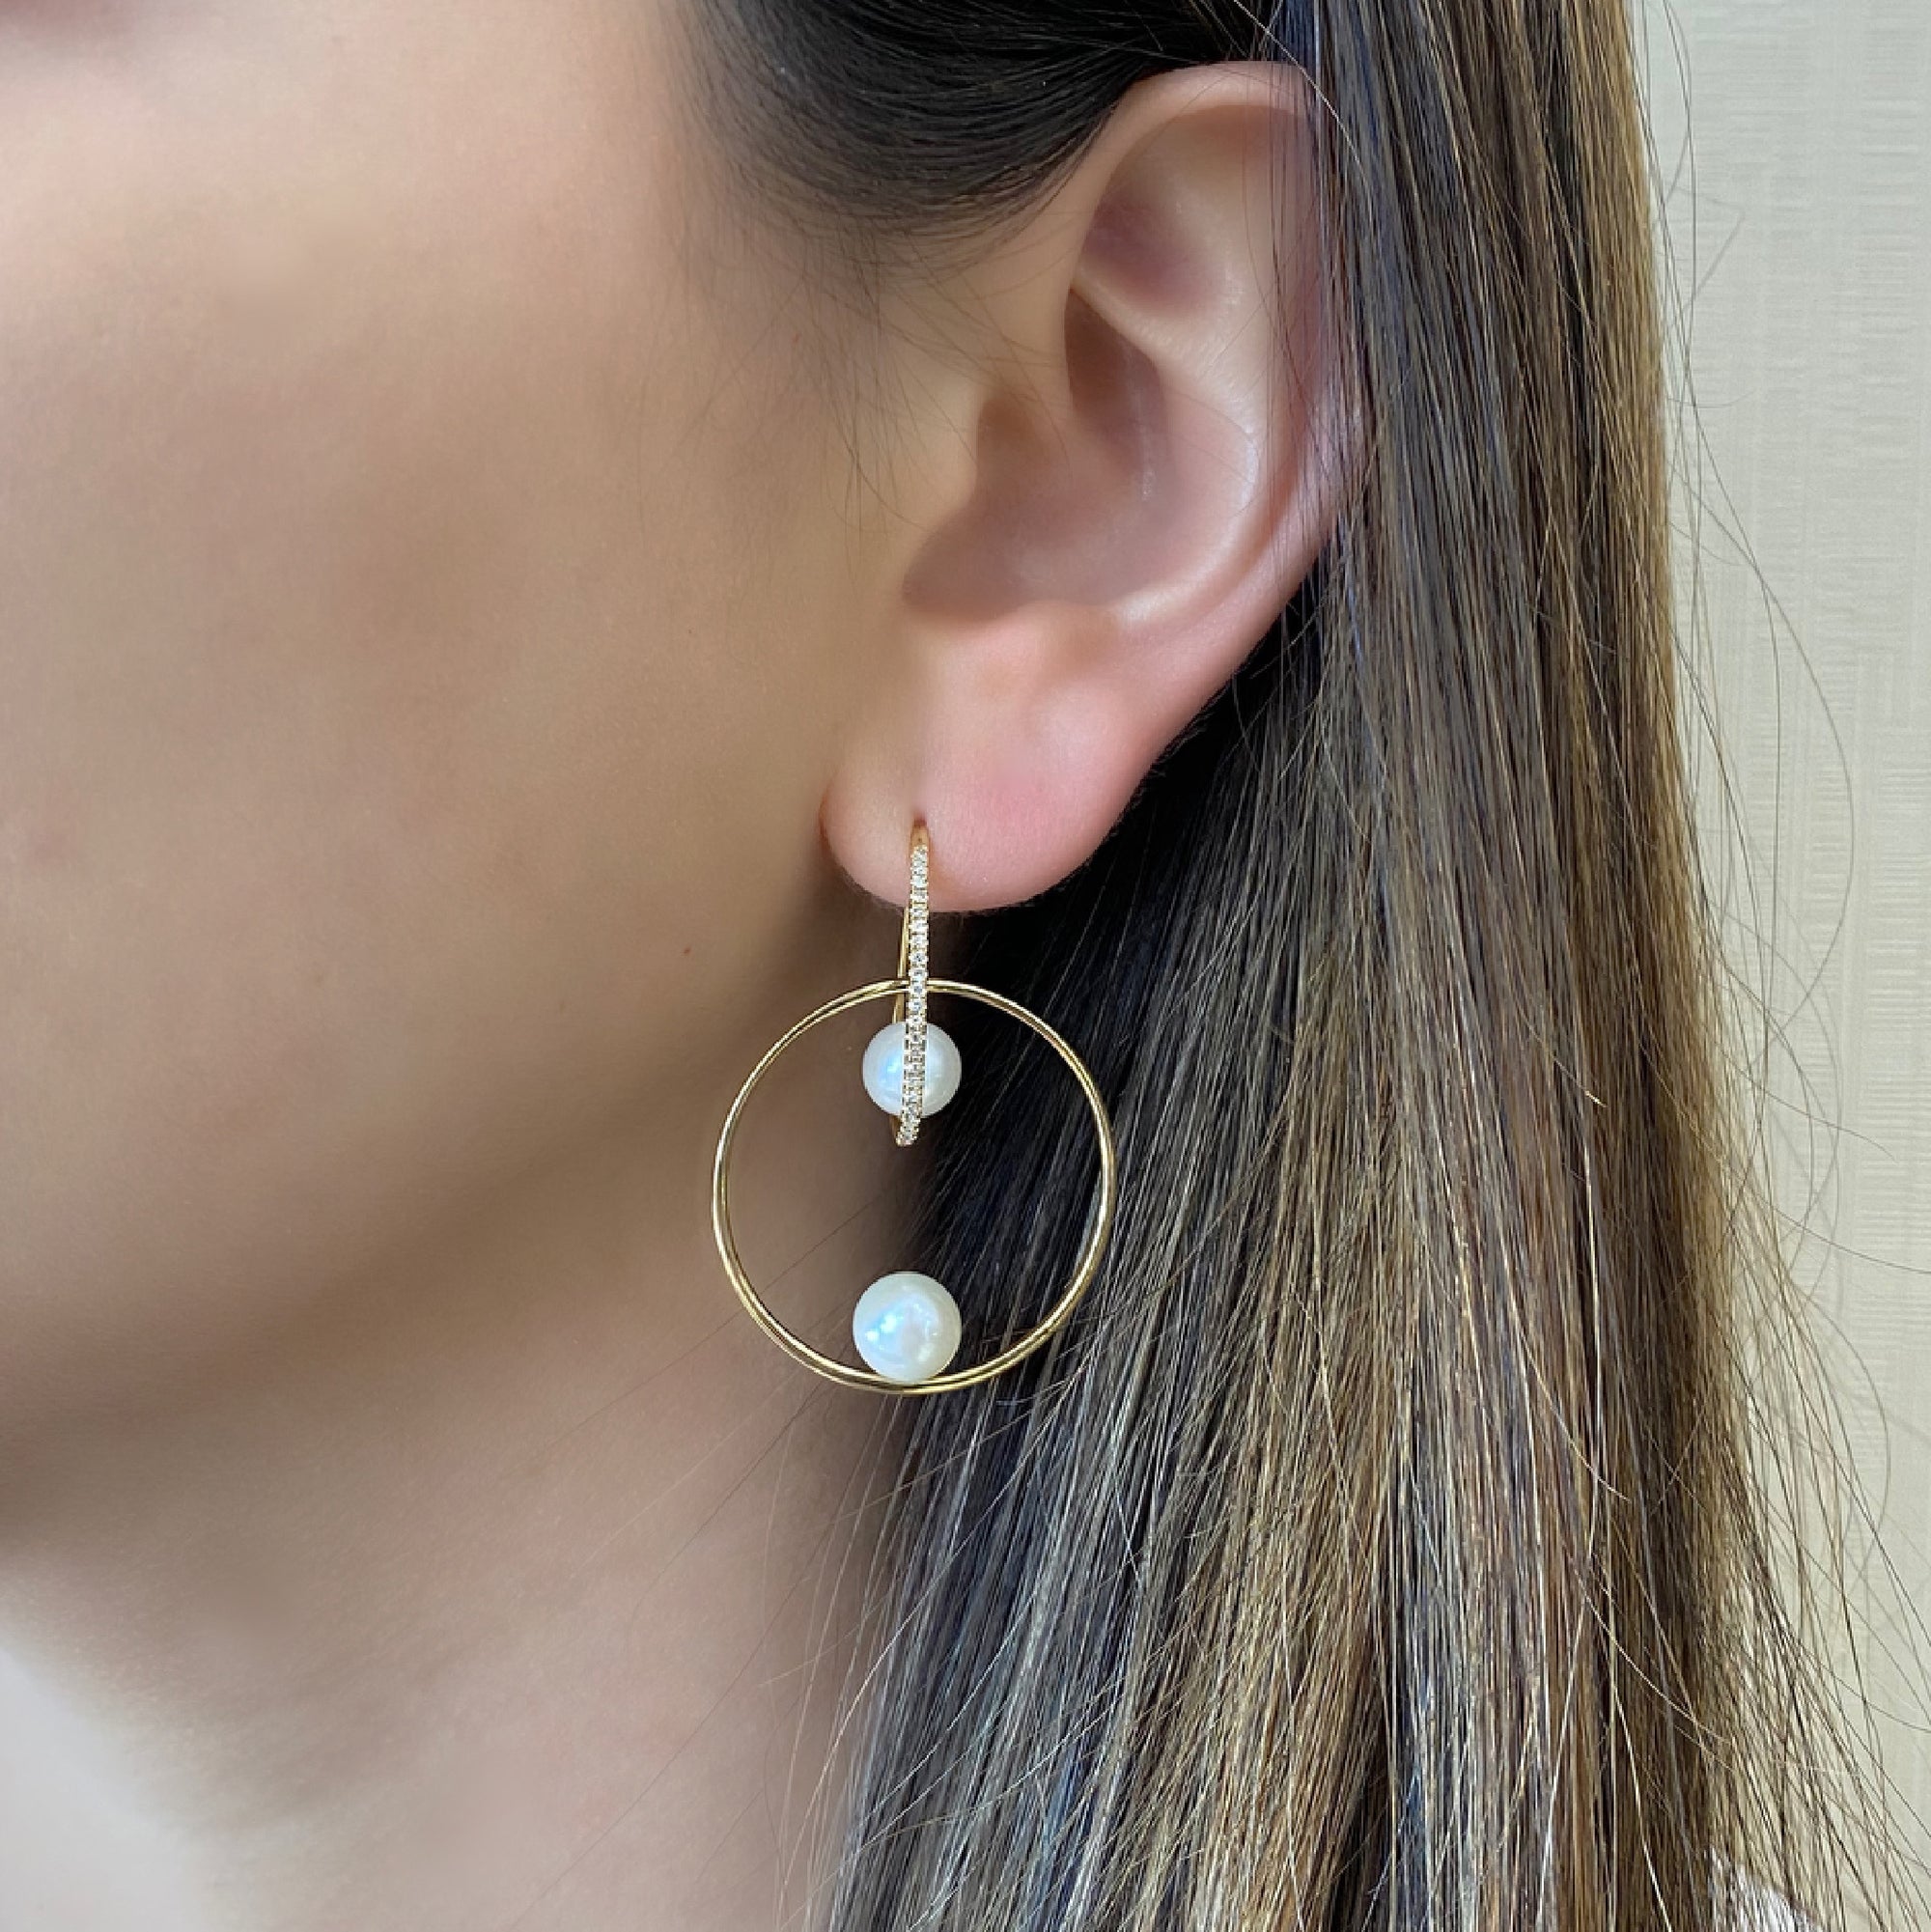 Pearl & Diamond Hoop Earrings  - 14K gold weighing 4.88 grams  - 44 round diamonds totaling 0.16 carats  - 4 pearls